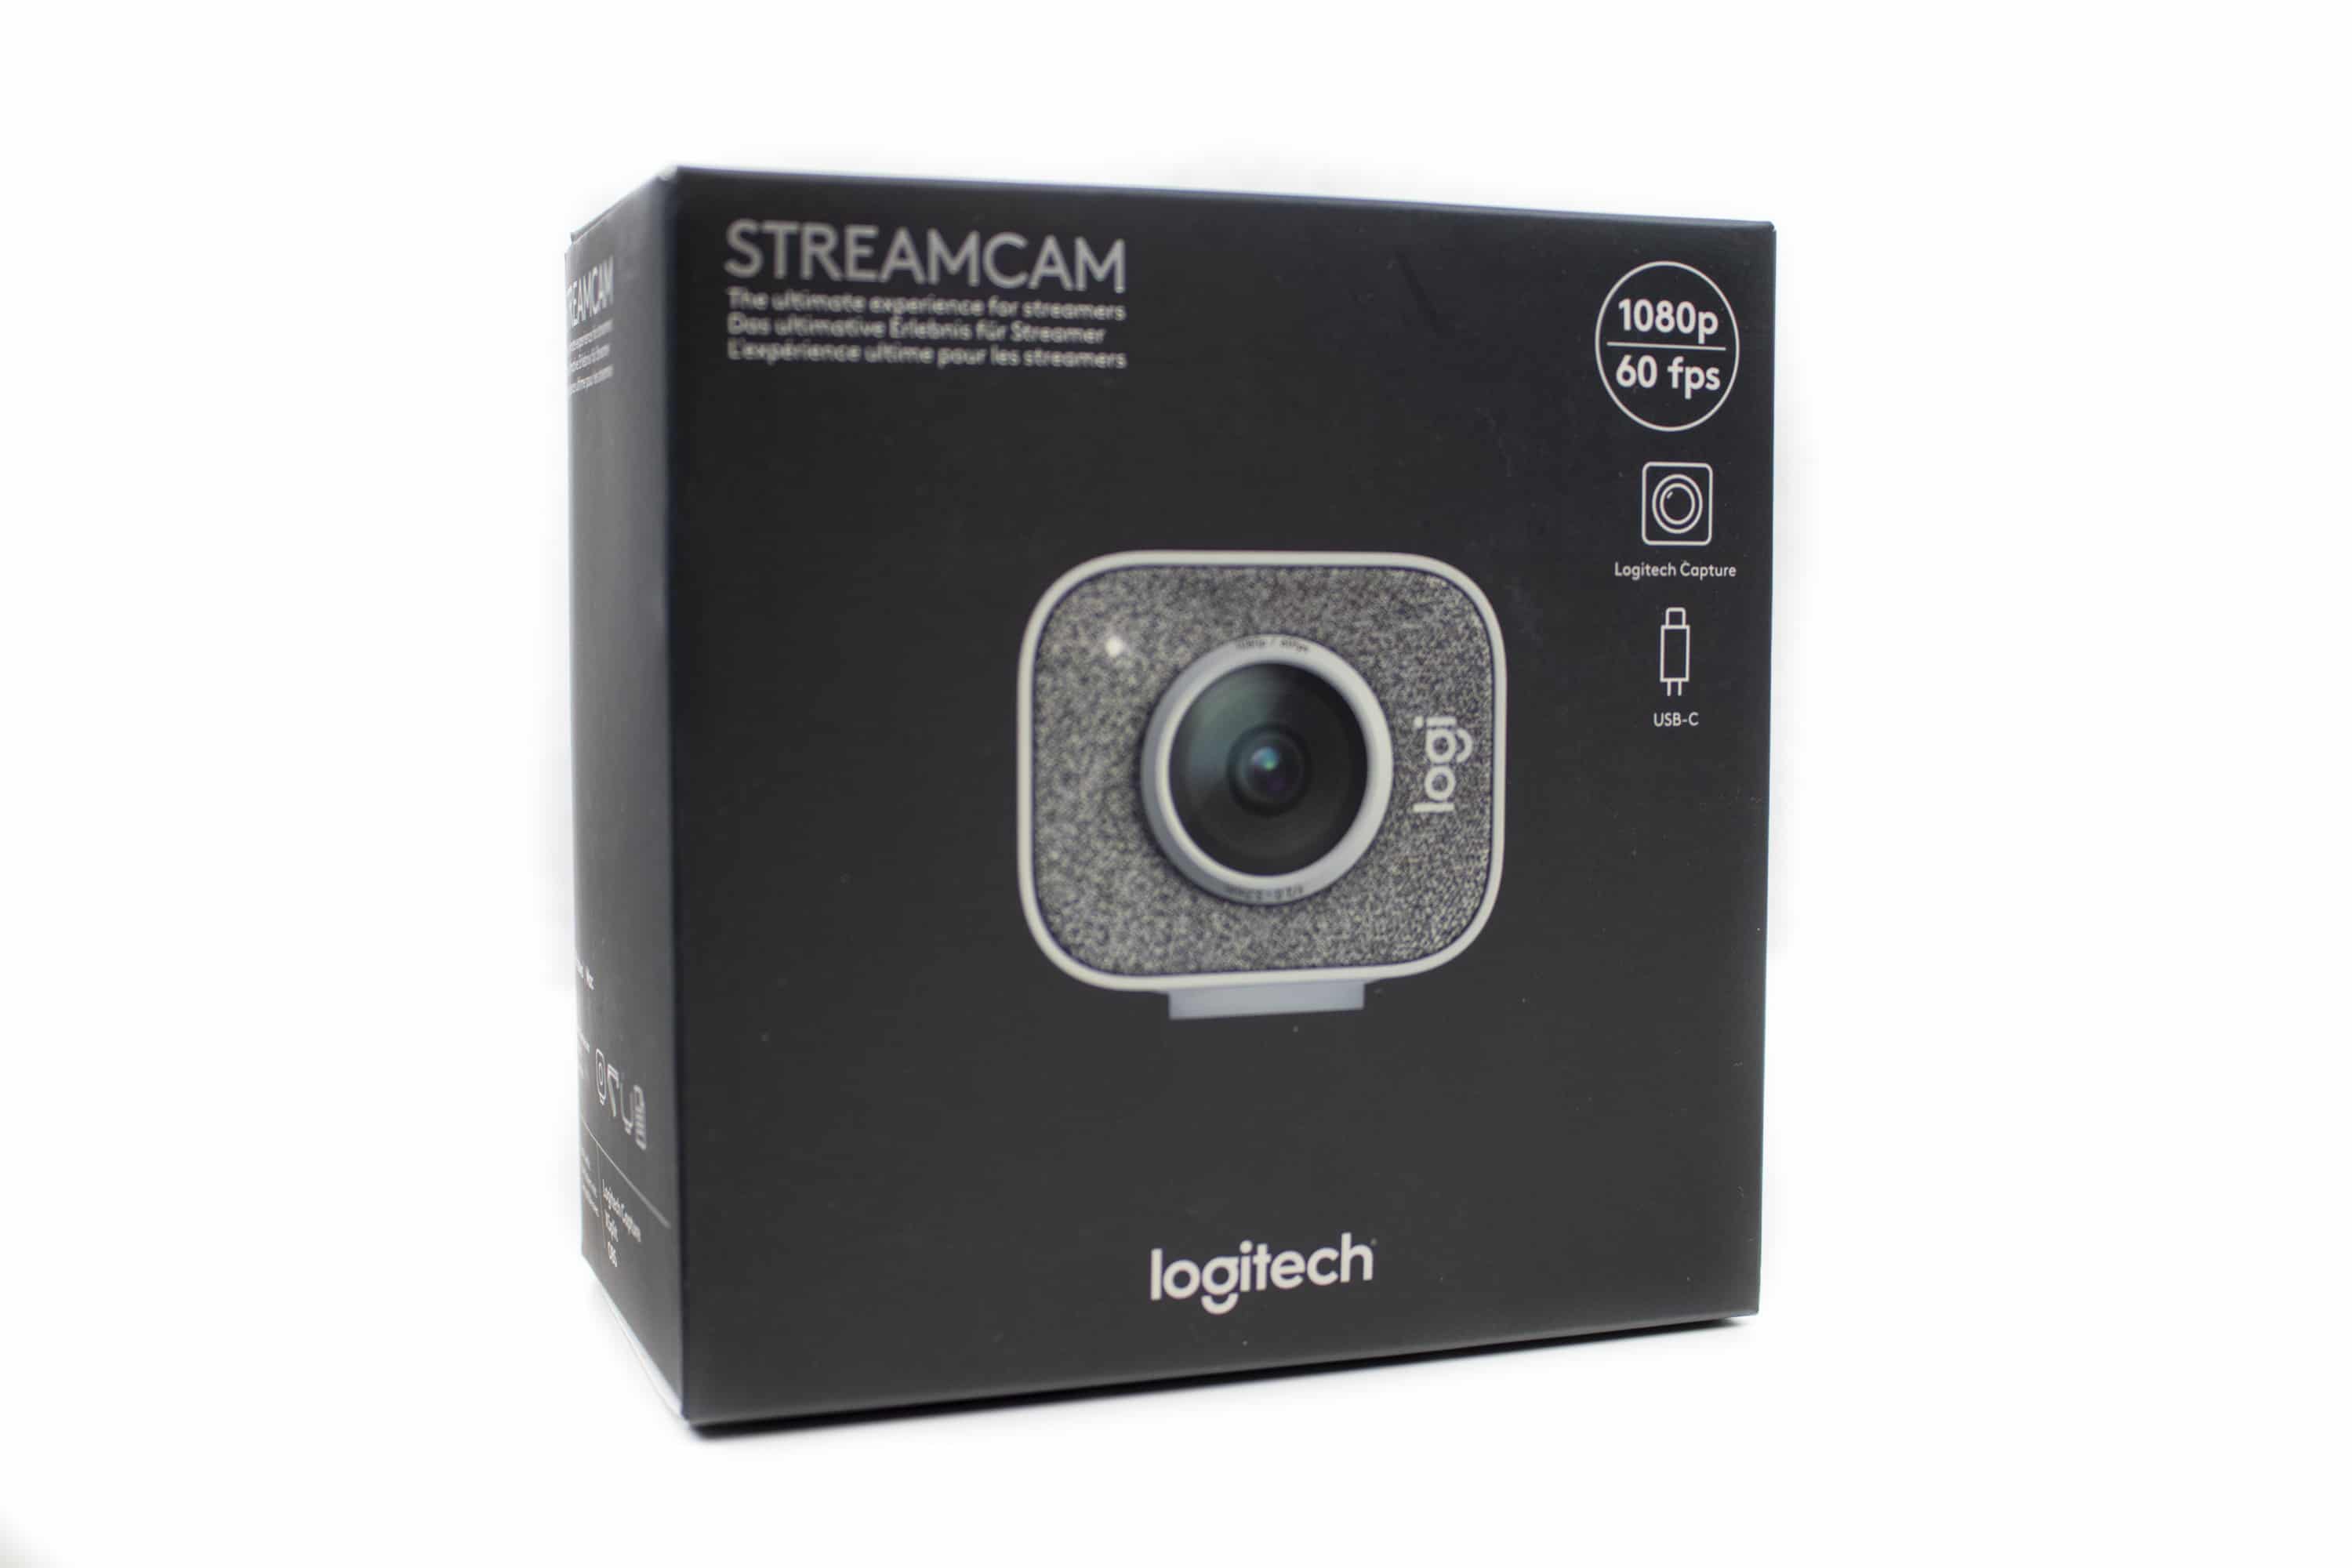 Logitech StreamCam in test - a webcam for streamers?